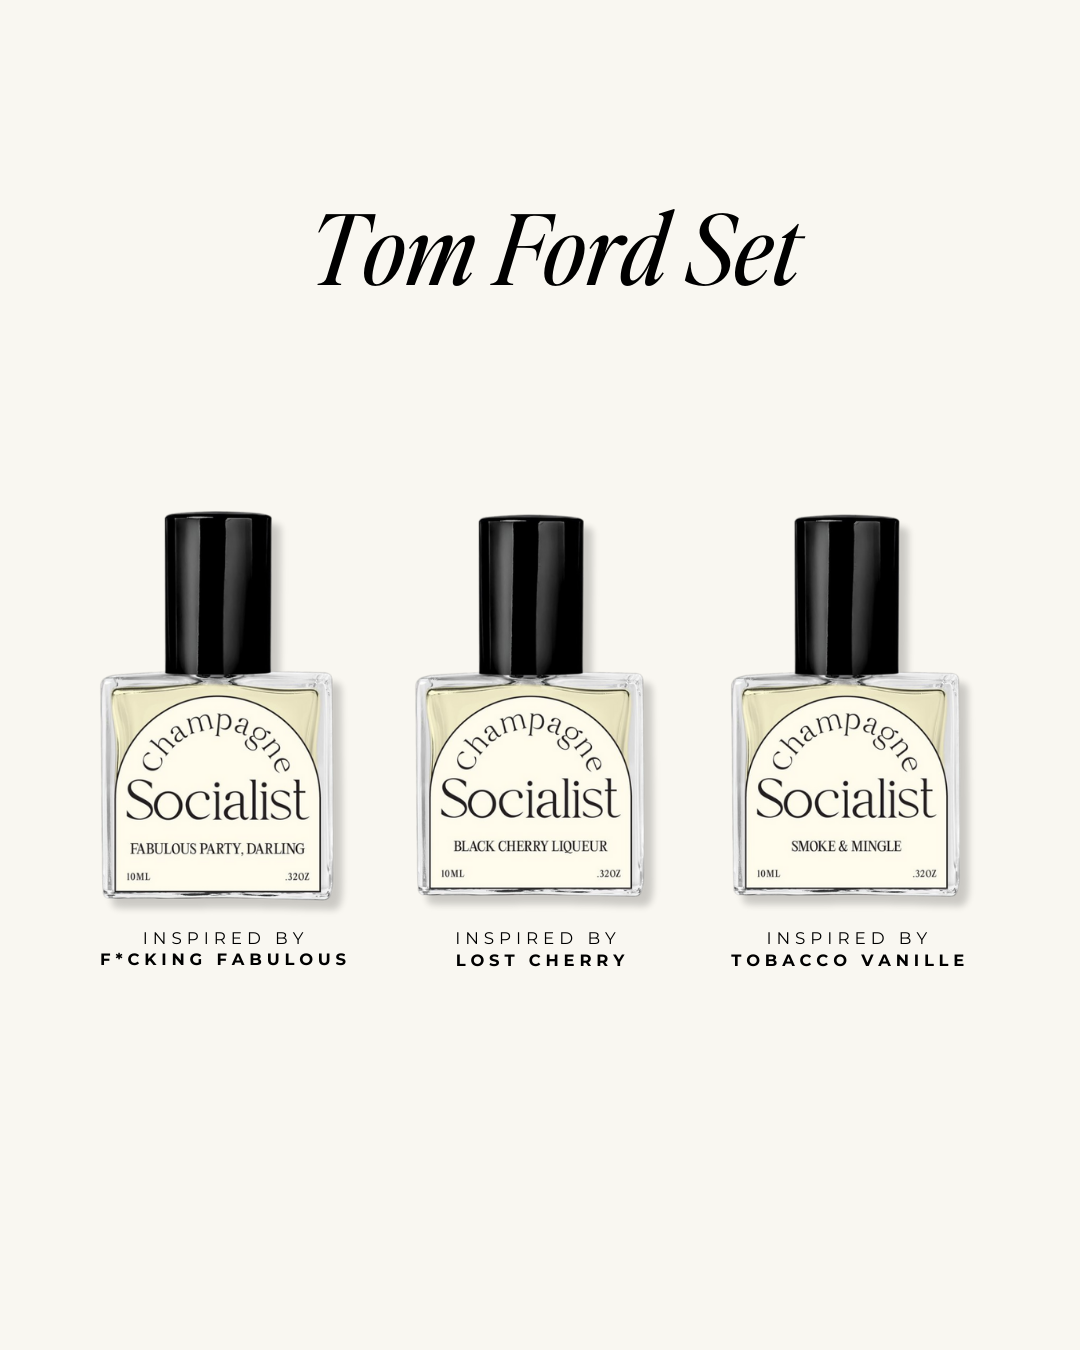 TOM FORD INSPIRED PERFUME OIL SET - CHAMPAGNE SOCIALIST